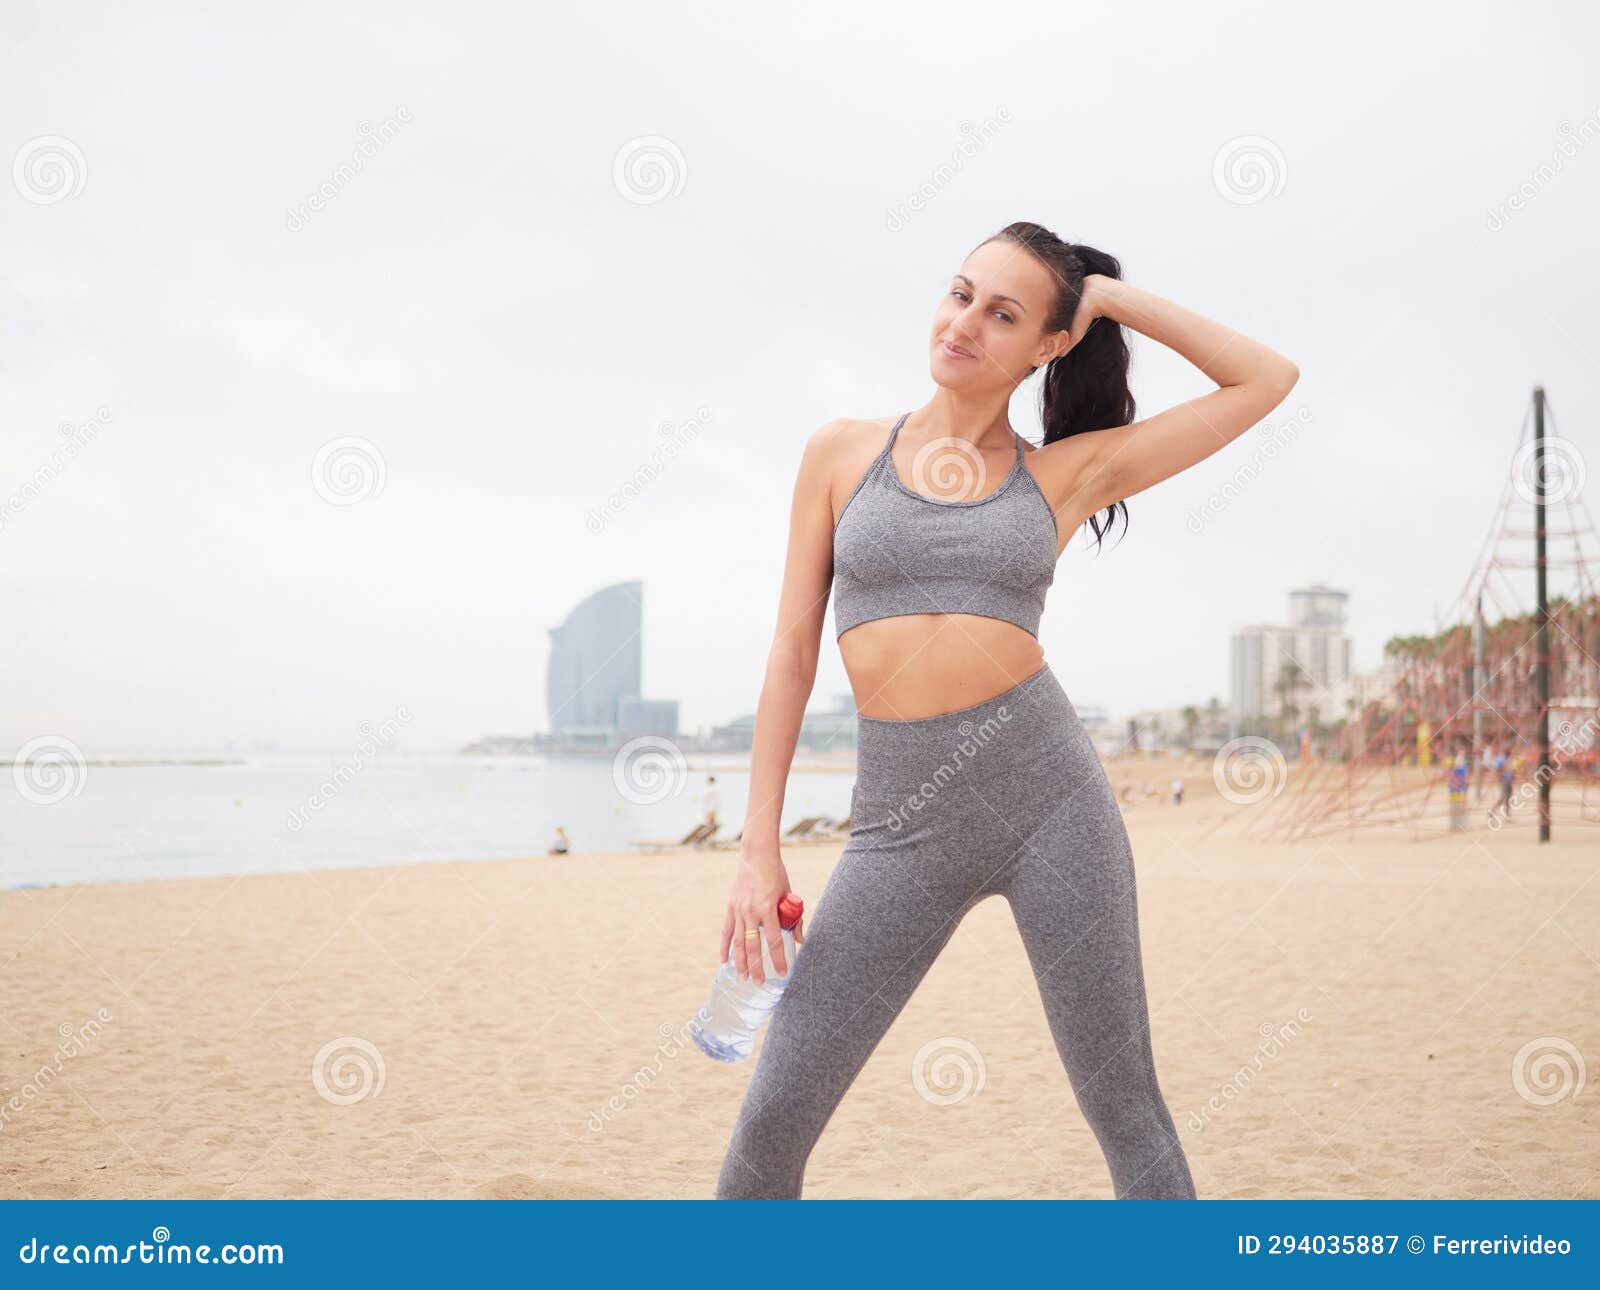 young woman doing stretching at playa de la barceloneta - barcelona spain.